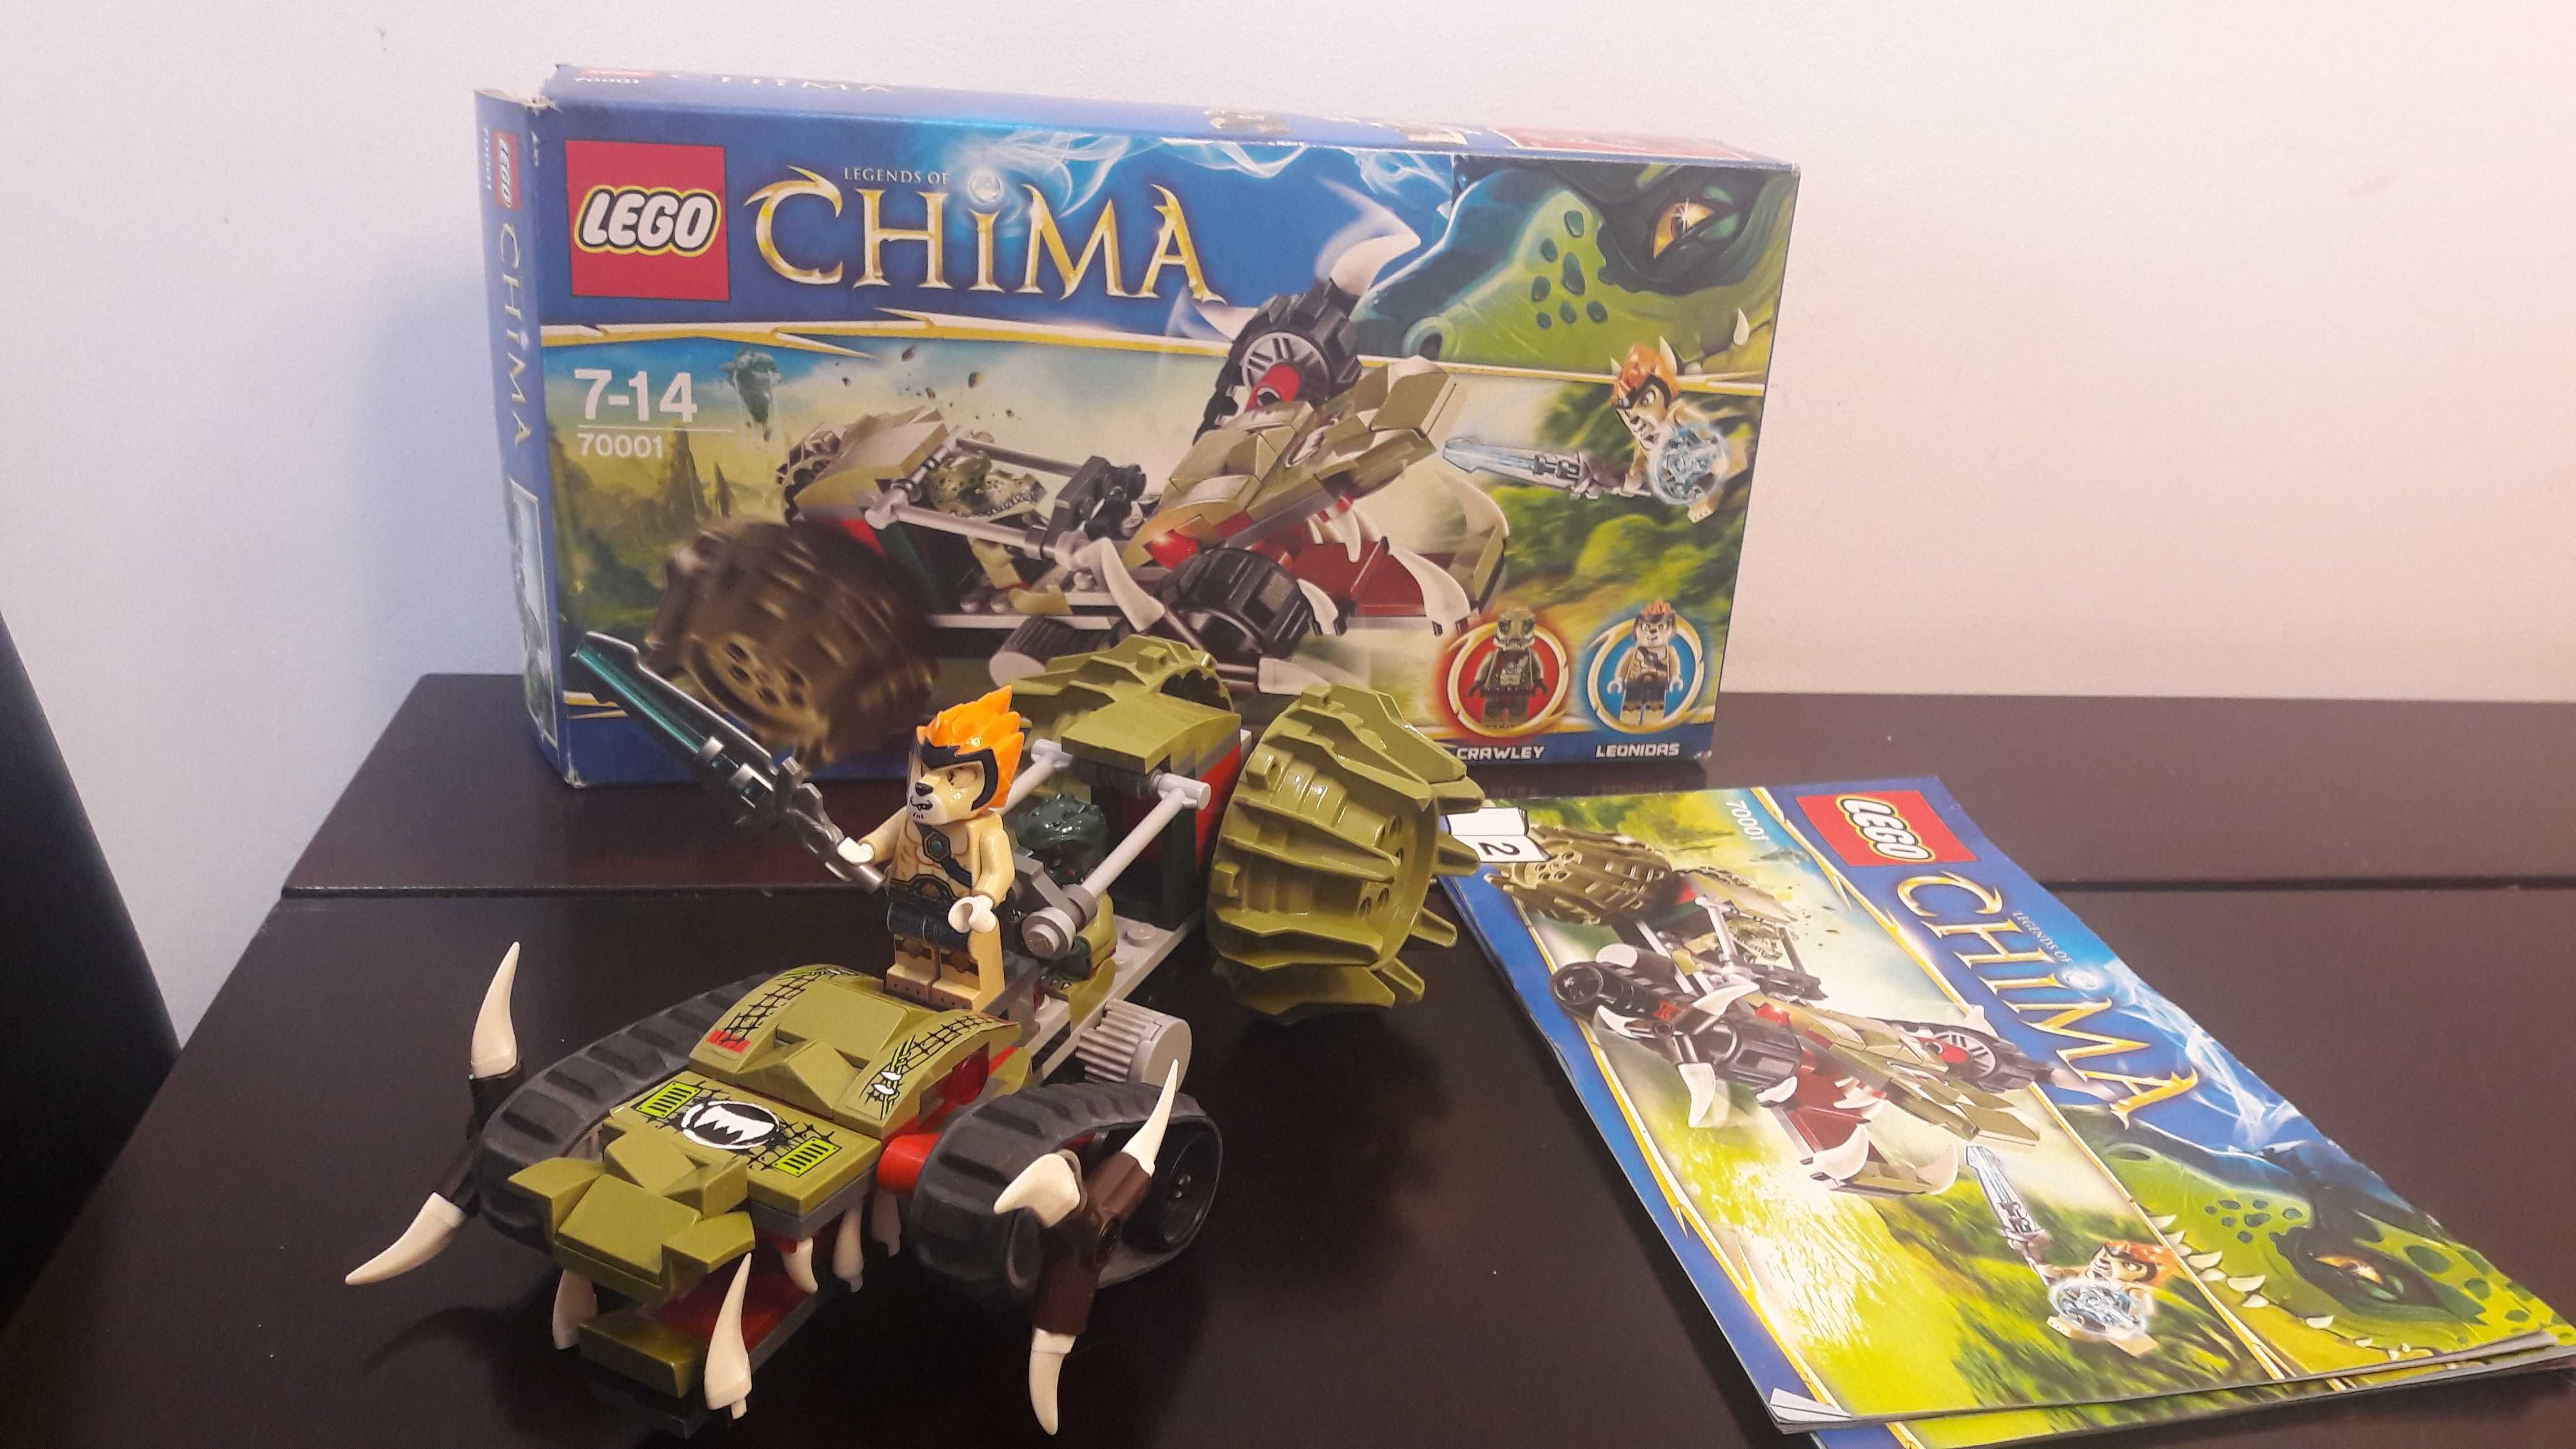 Lego Chima 70001 Crawleys Reptile Grabber